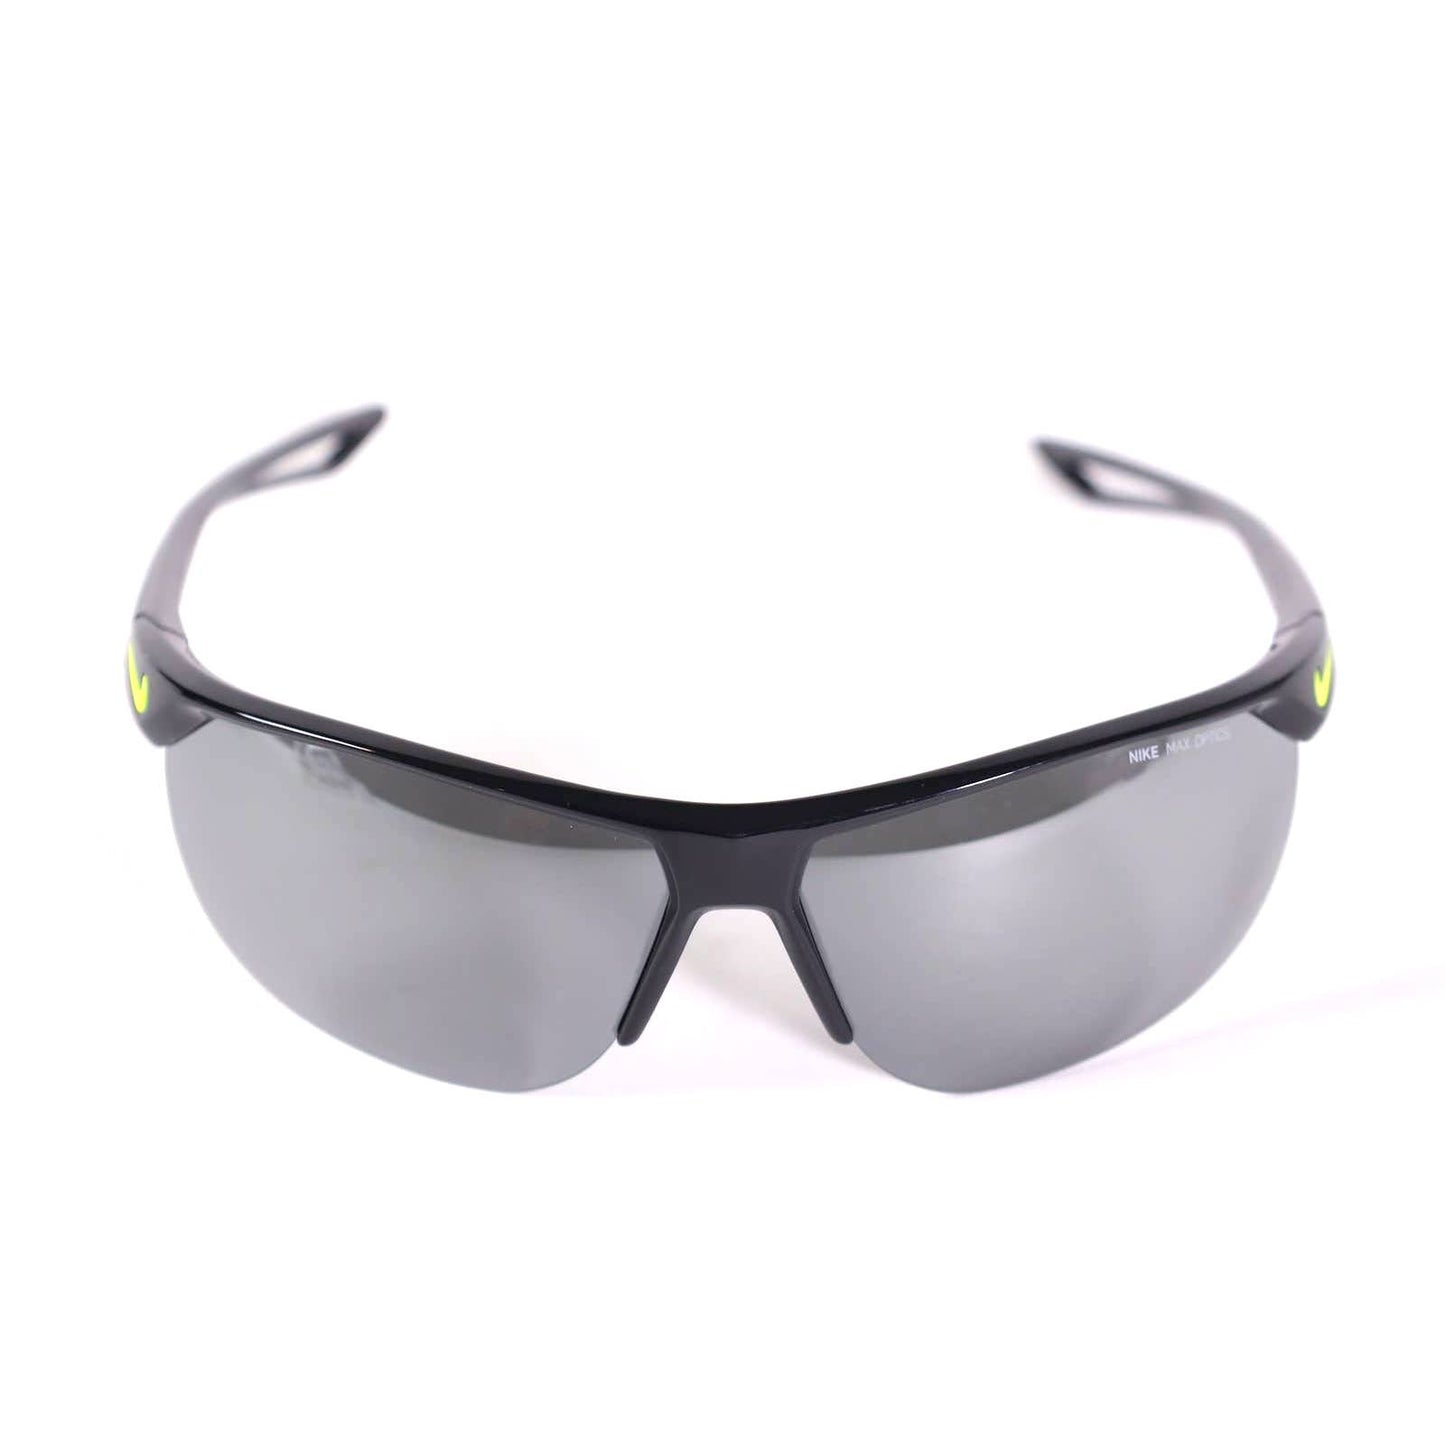 Nike Mens Cross Trainer With Max Optics Sunglasses - Black/Grey Mirror